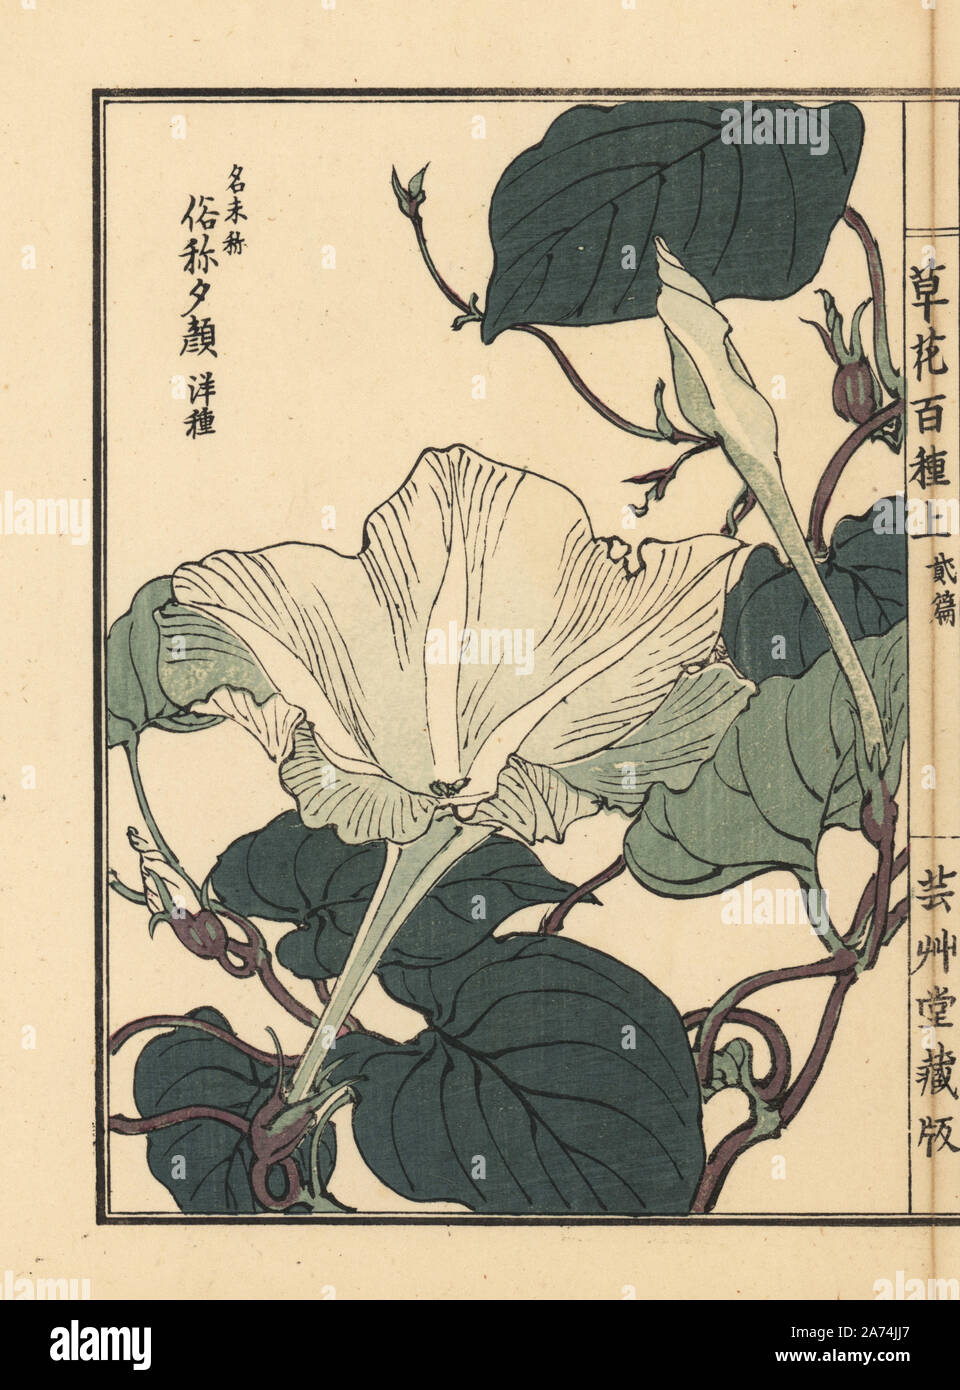 Yuugao, hyoutan, calabash, or bottle gourd flower, Lagenaria siceraria. Handcoloured woodblock print by Kono Bairei from Kusa Bana Hyakushu (One Hundred Varieties of Flowers), Tokyo, Yamada, 1901. Stock Photo